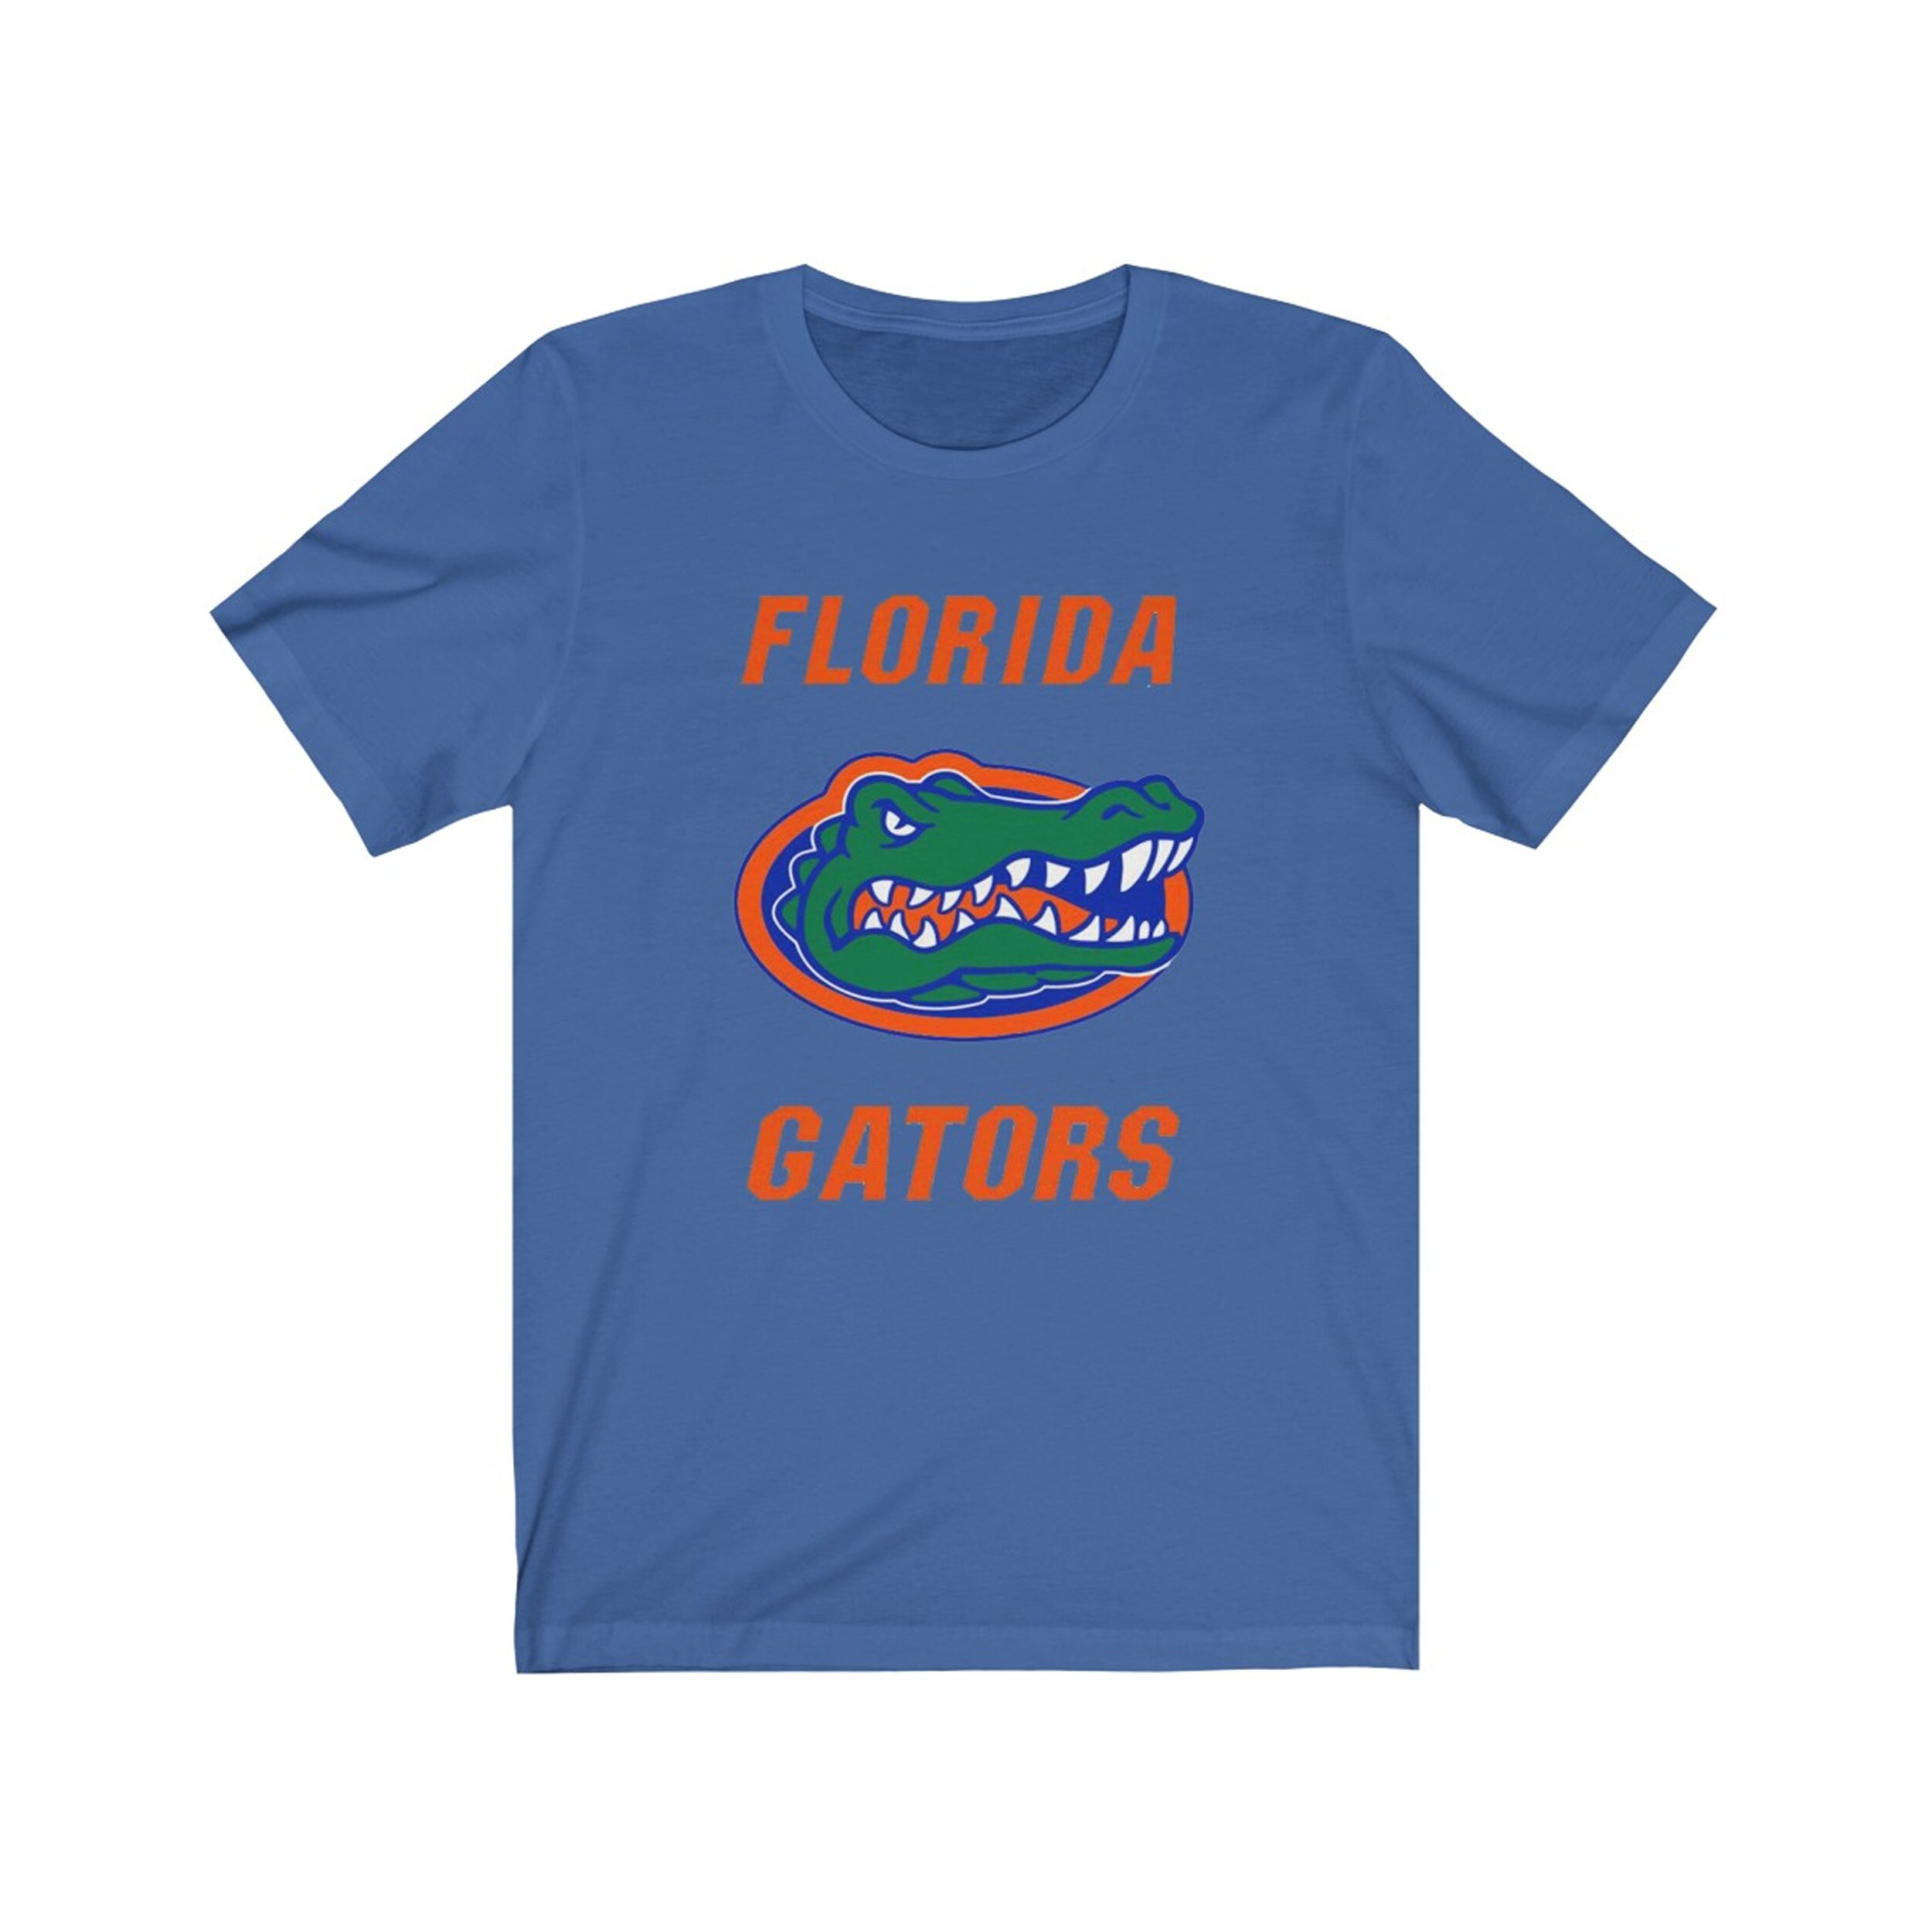 Unisex Florida Gator Baseball Shirt Florida Gators Football | Etsy